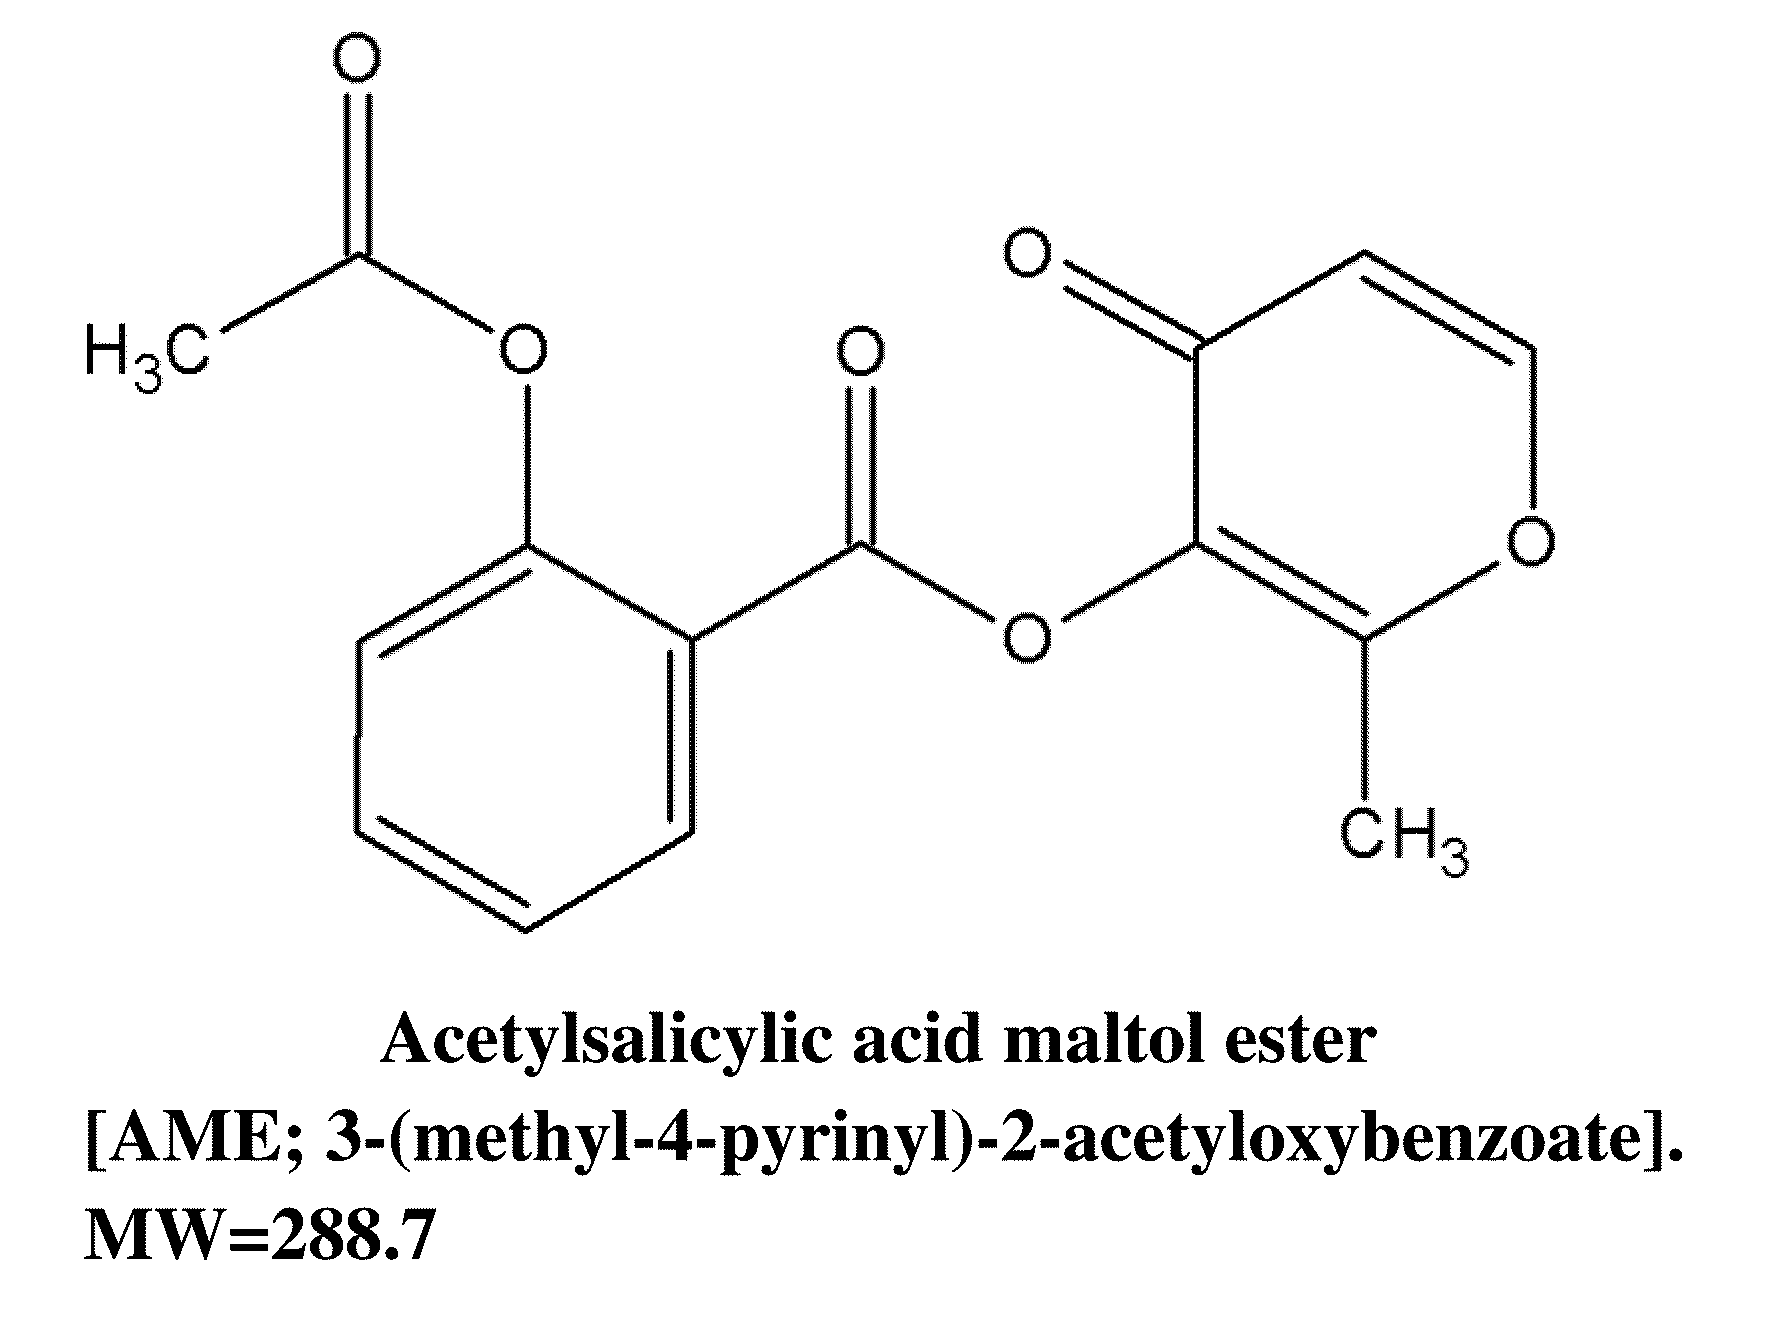 Anti-parkinsonian compound acetylsalicylic acid maltol ester